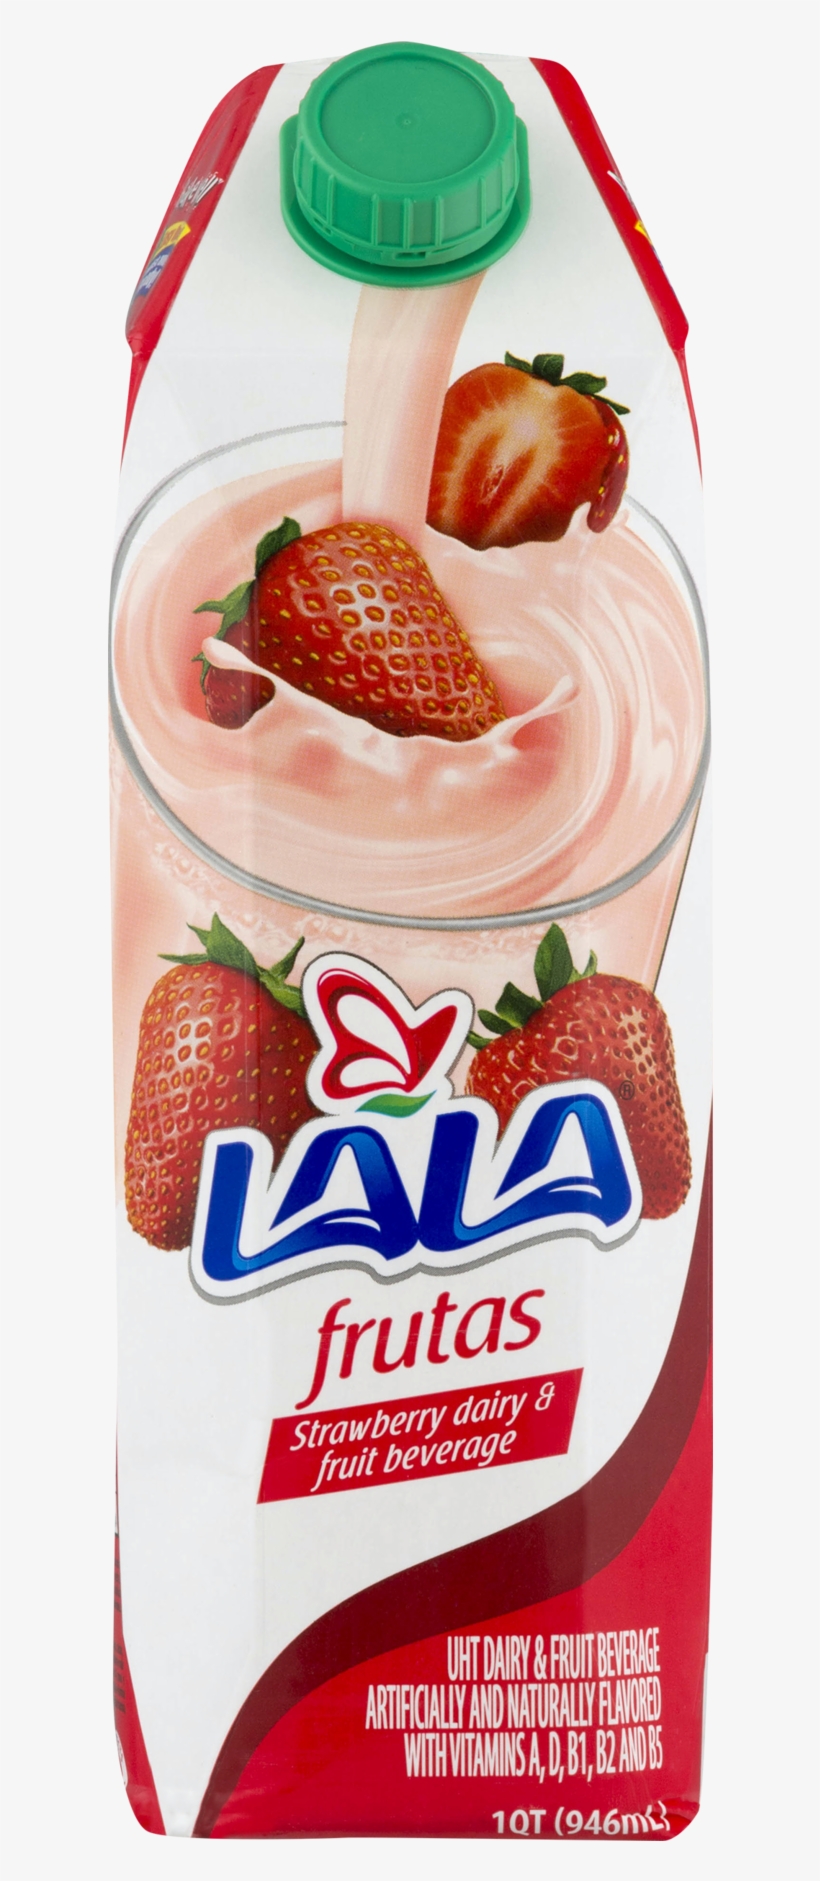 Lala Frutas Strawberry Dairy And Fruit Beverage, - Lala Frutas, transparent png #1214387